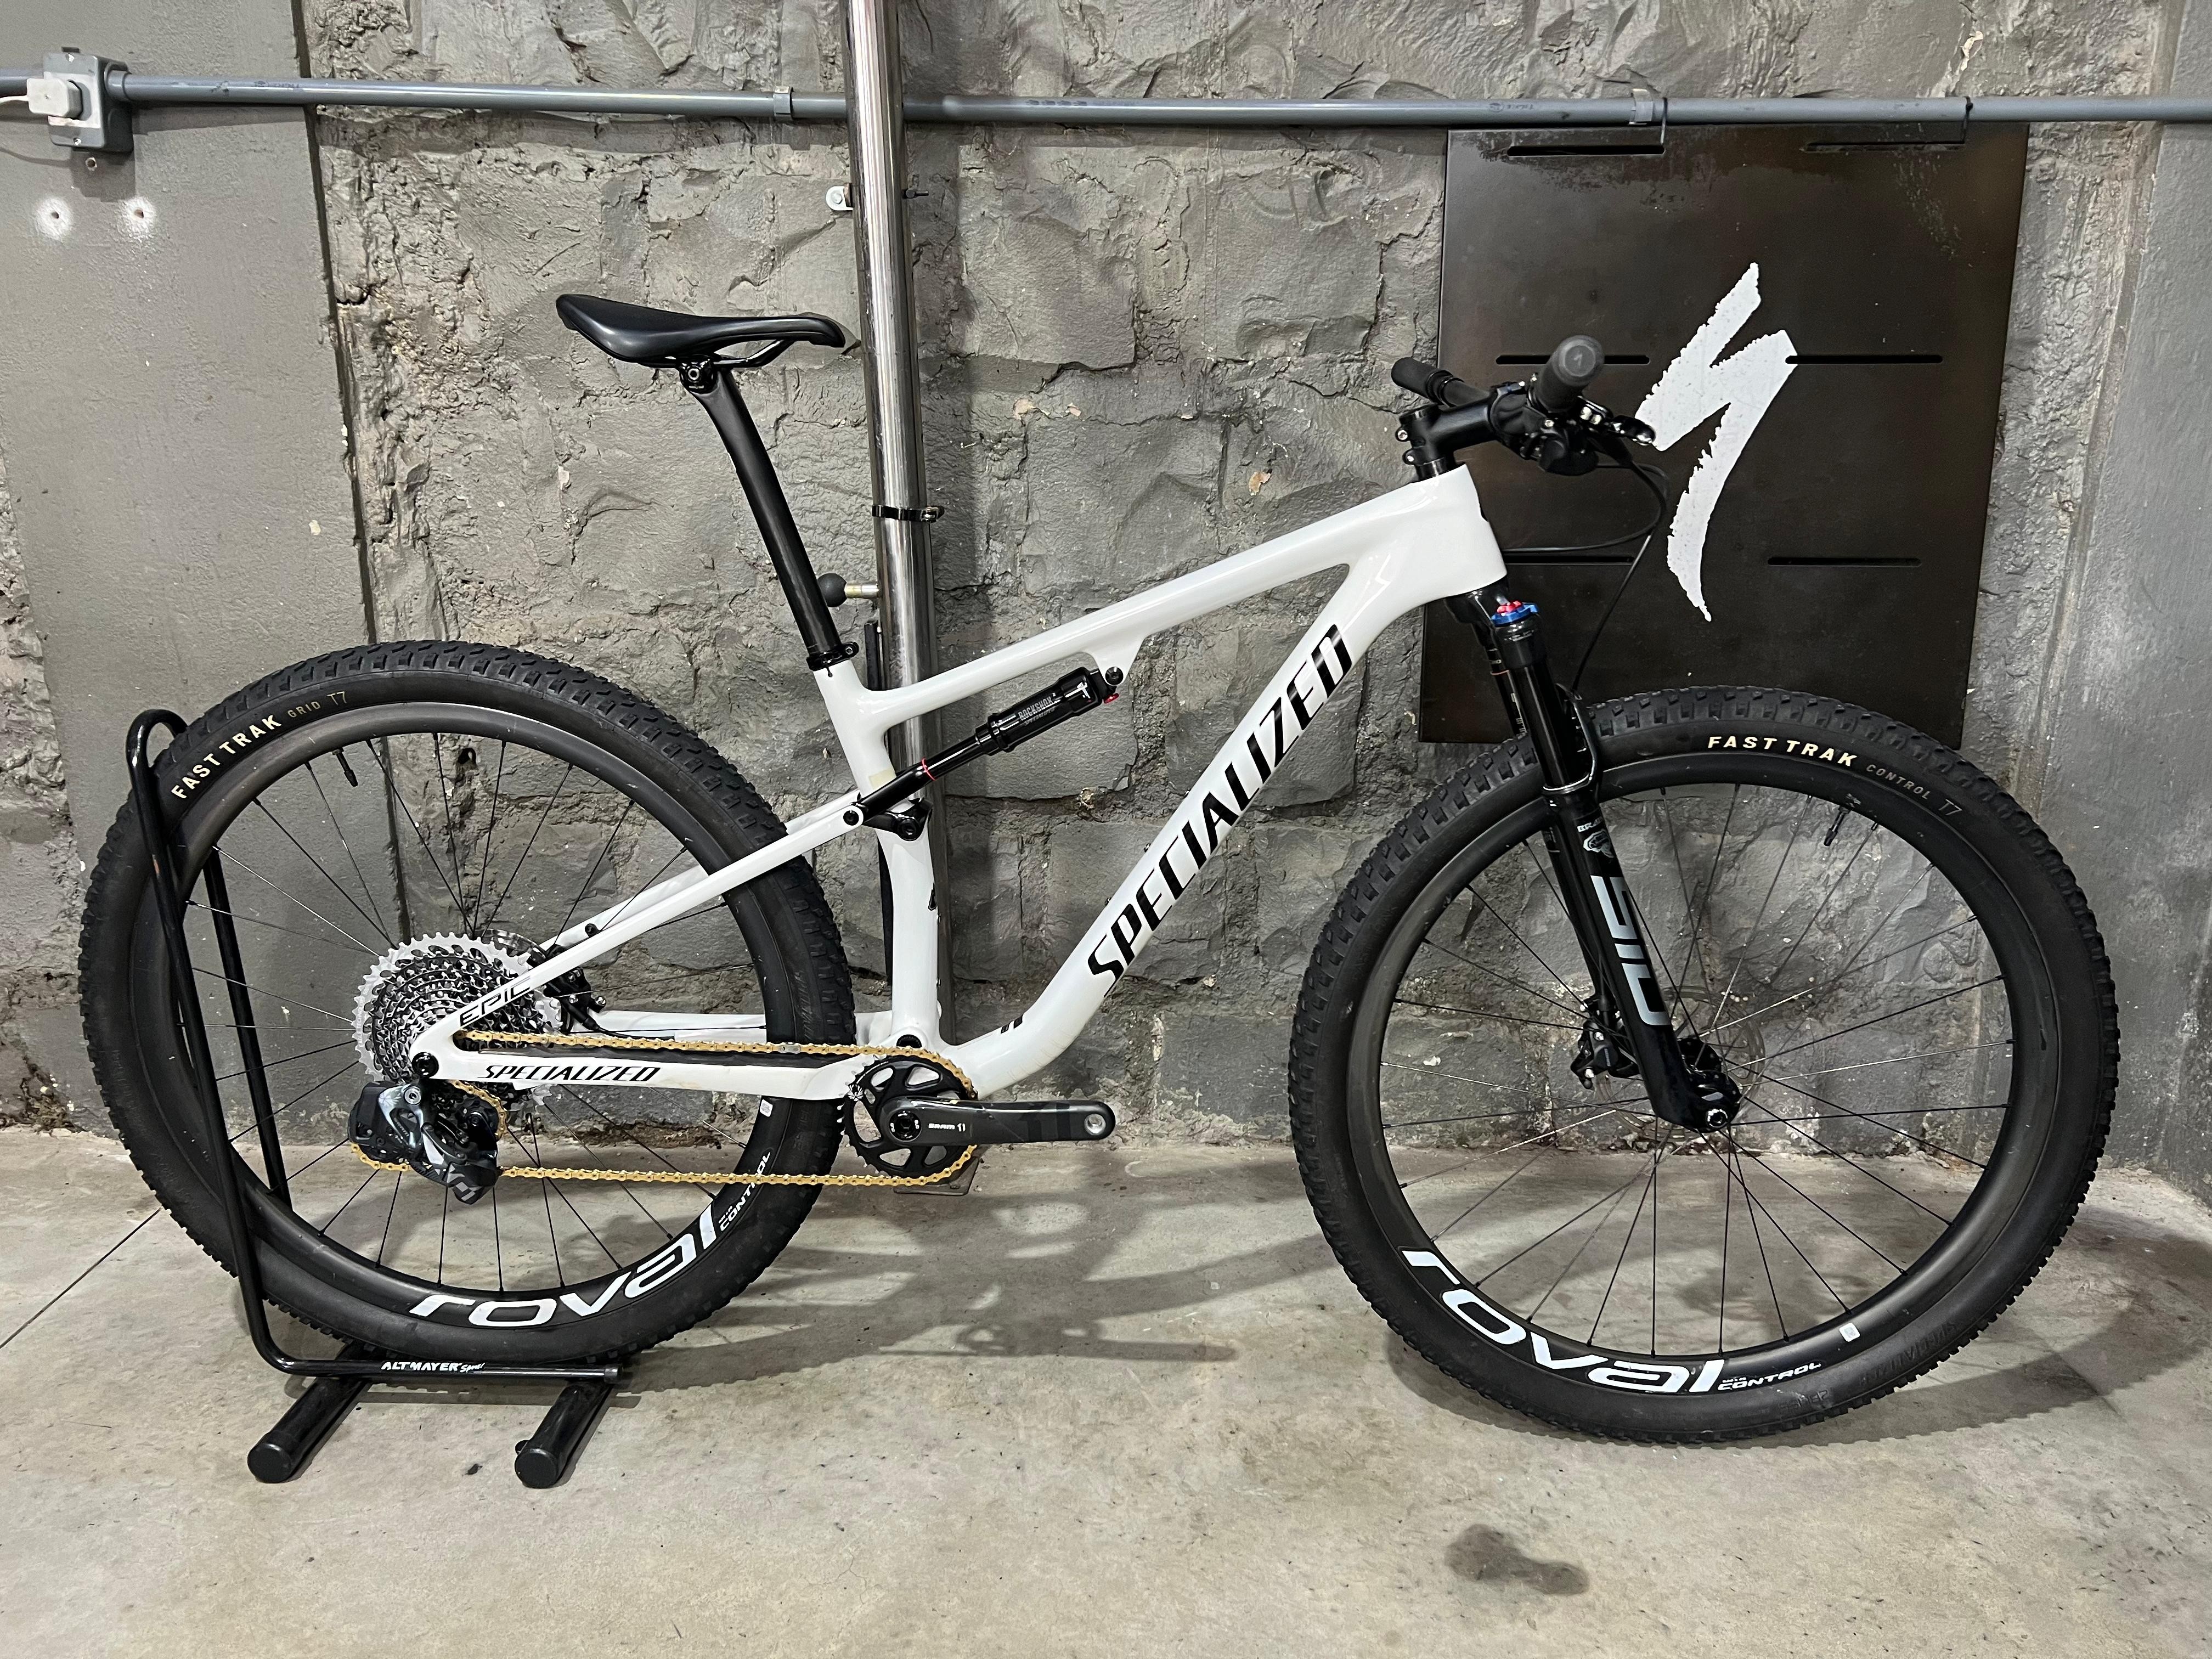 Bicicleta Seminova Specialized Epic Pro Tamanho M 2021